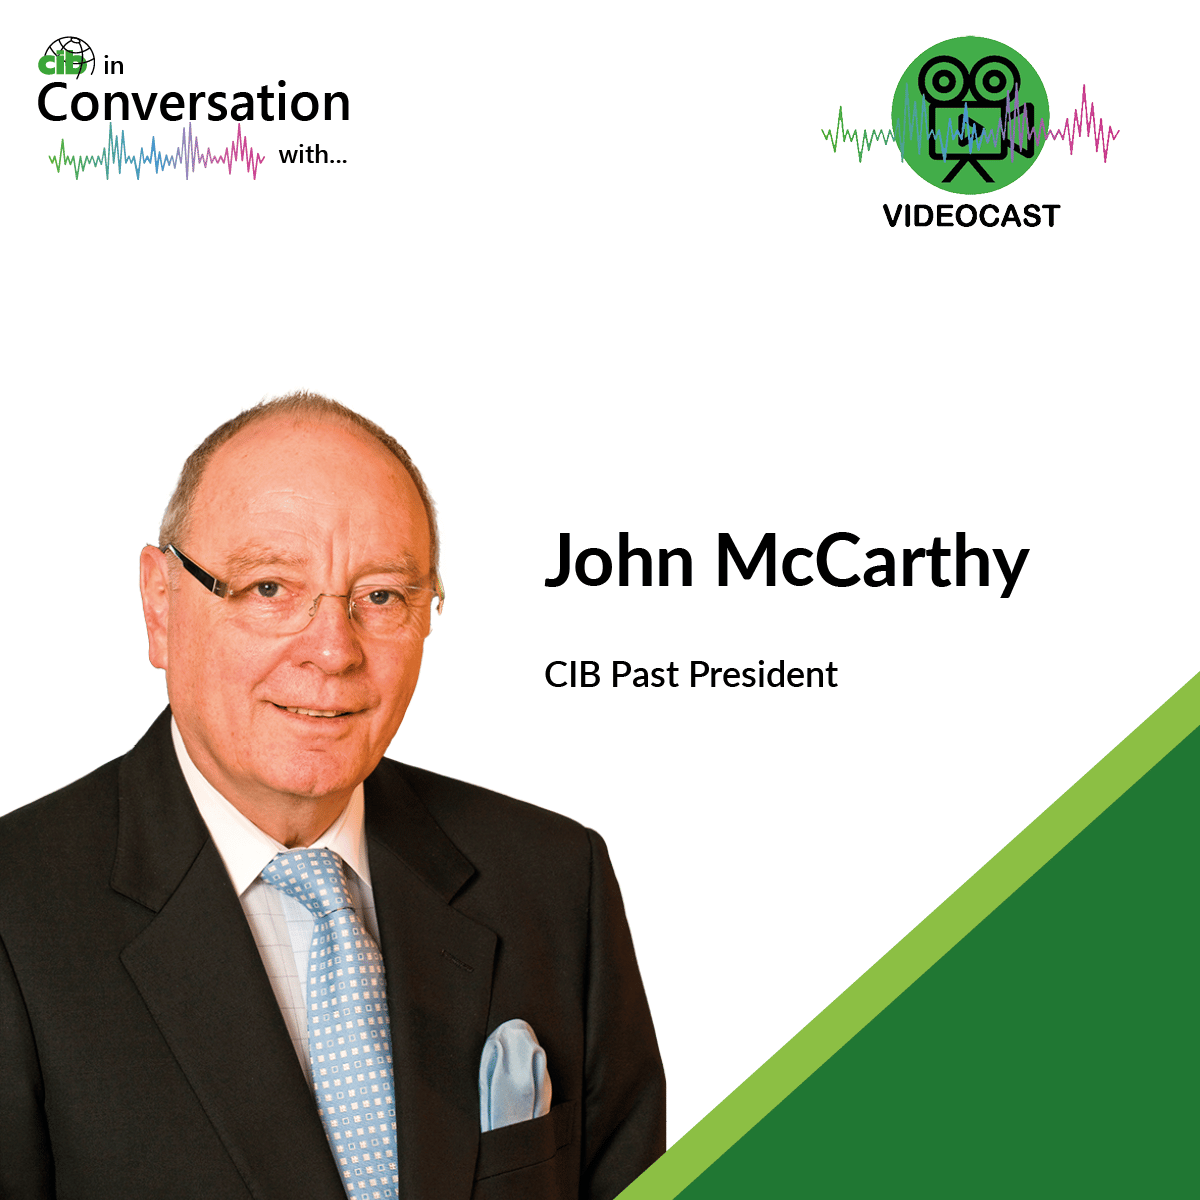 In Conversation with John McCarthy, CIB past President